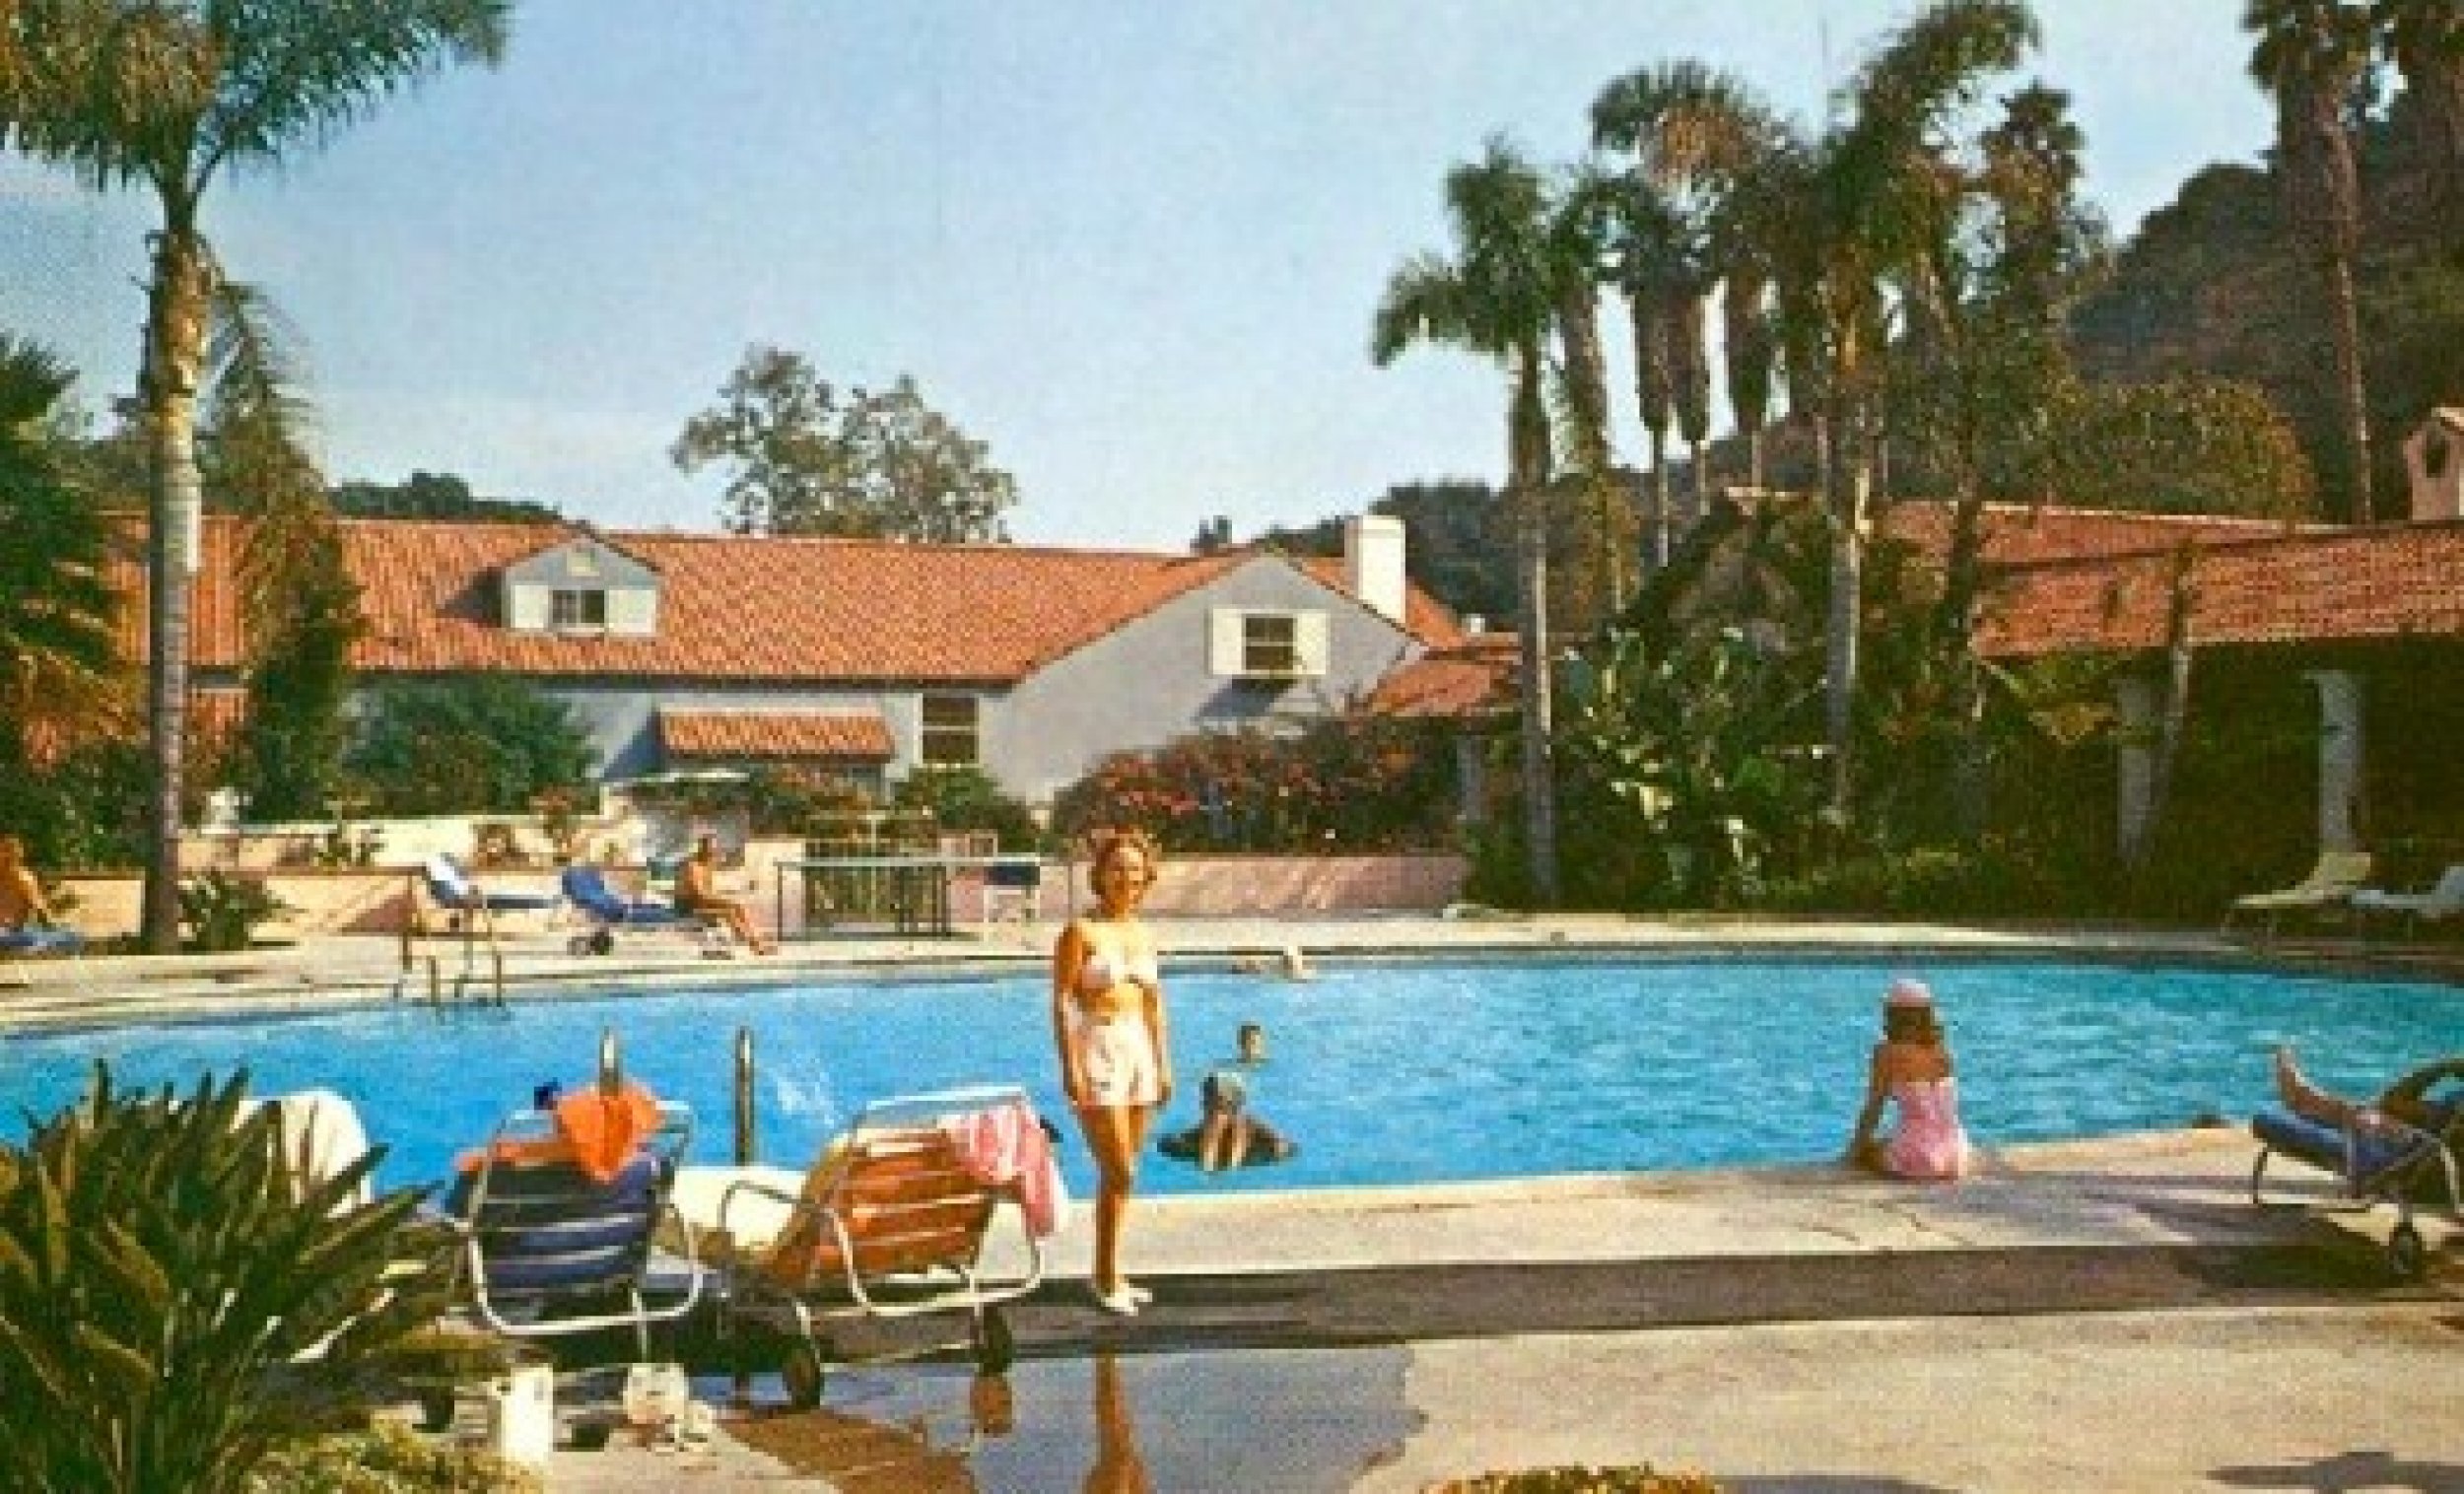 Hotel Bel-Air 1950